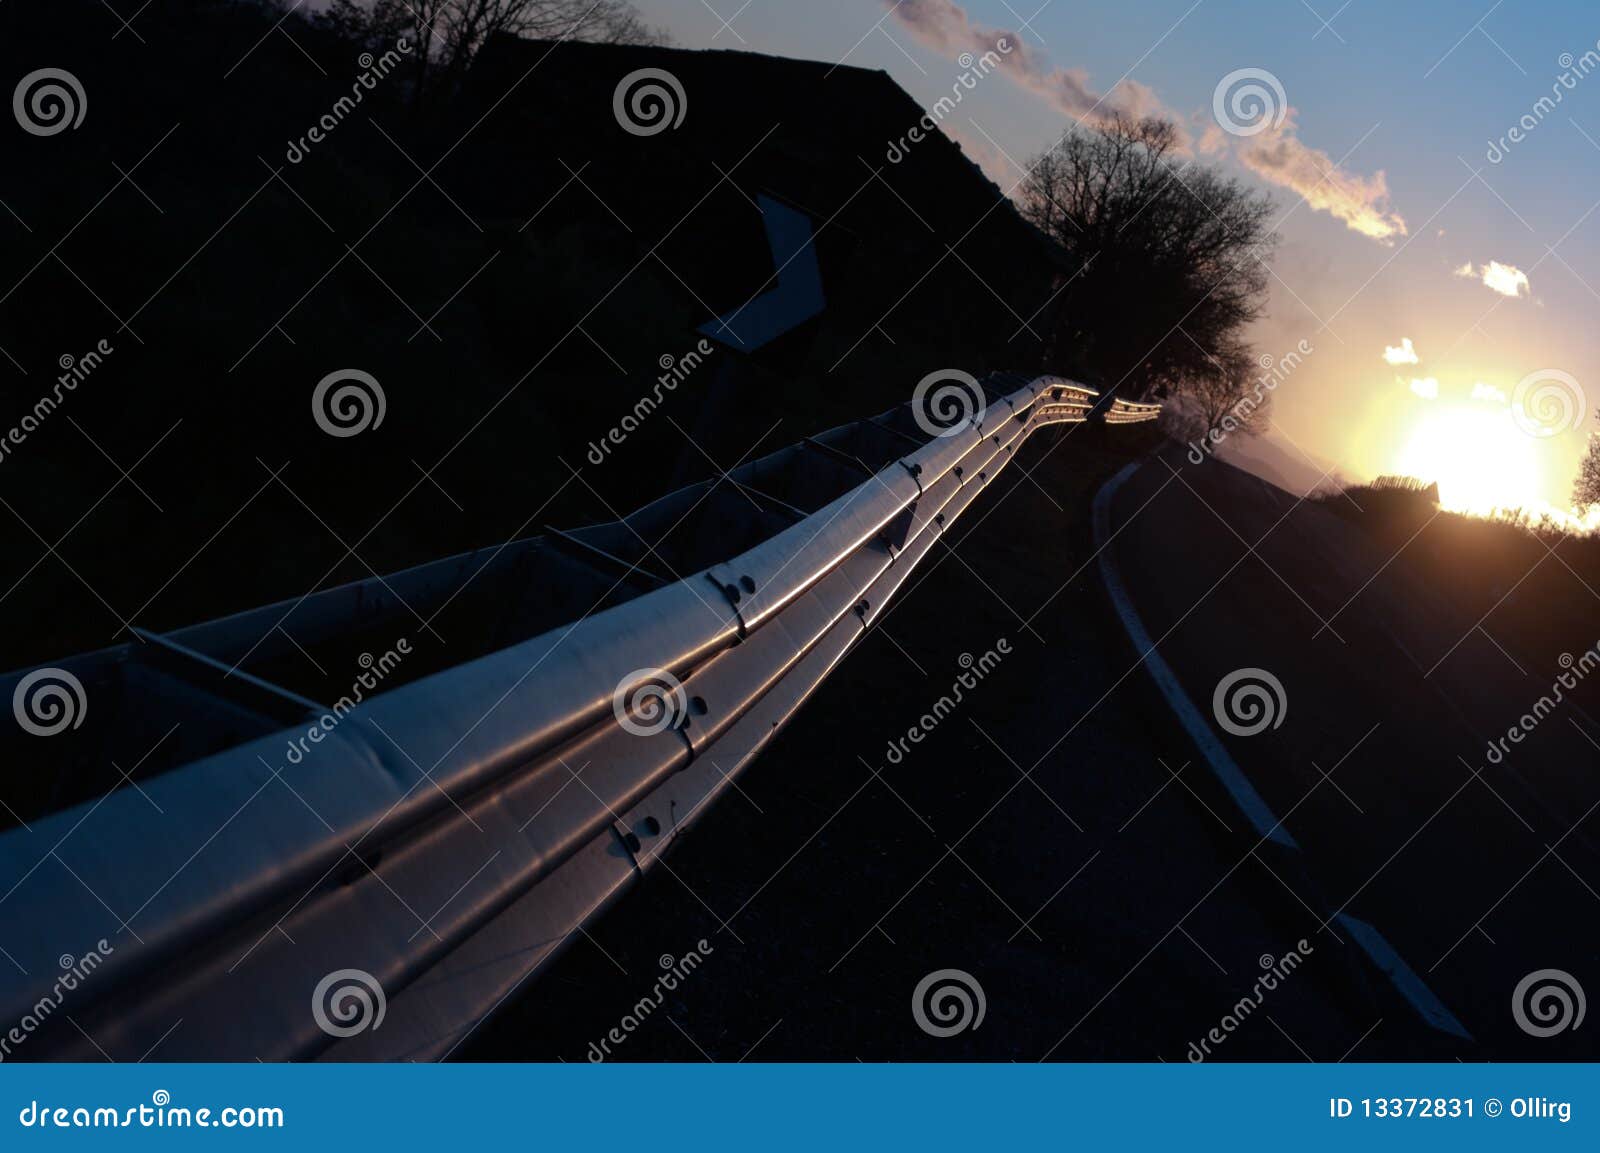 guardrail vanish on road at sunset